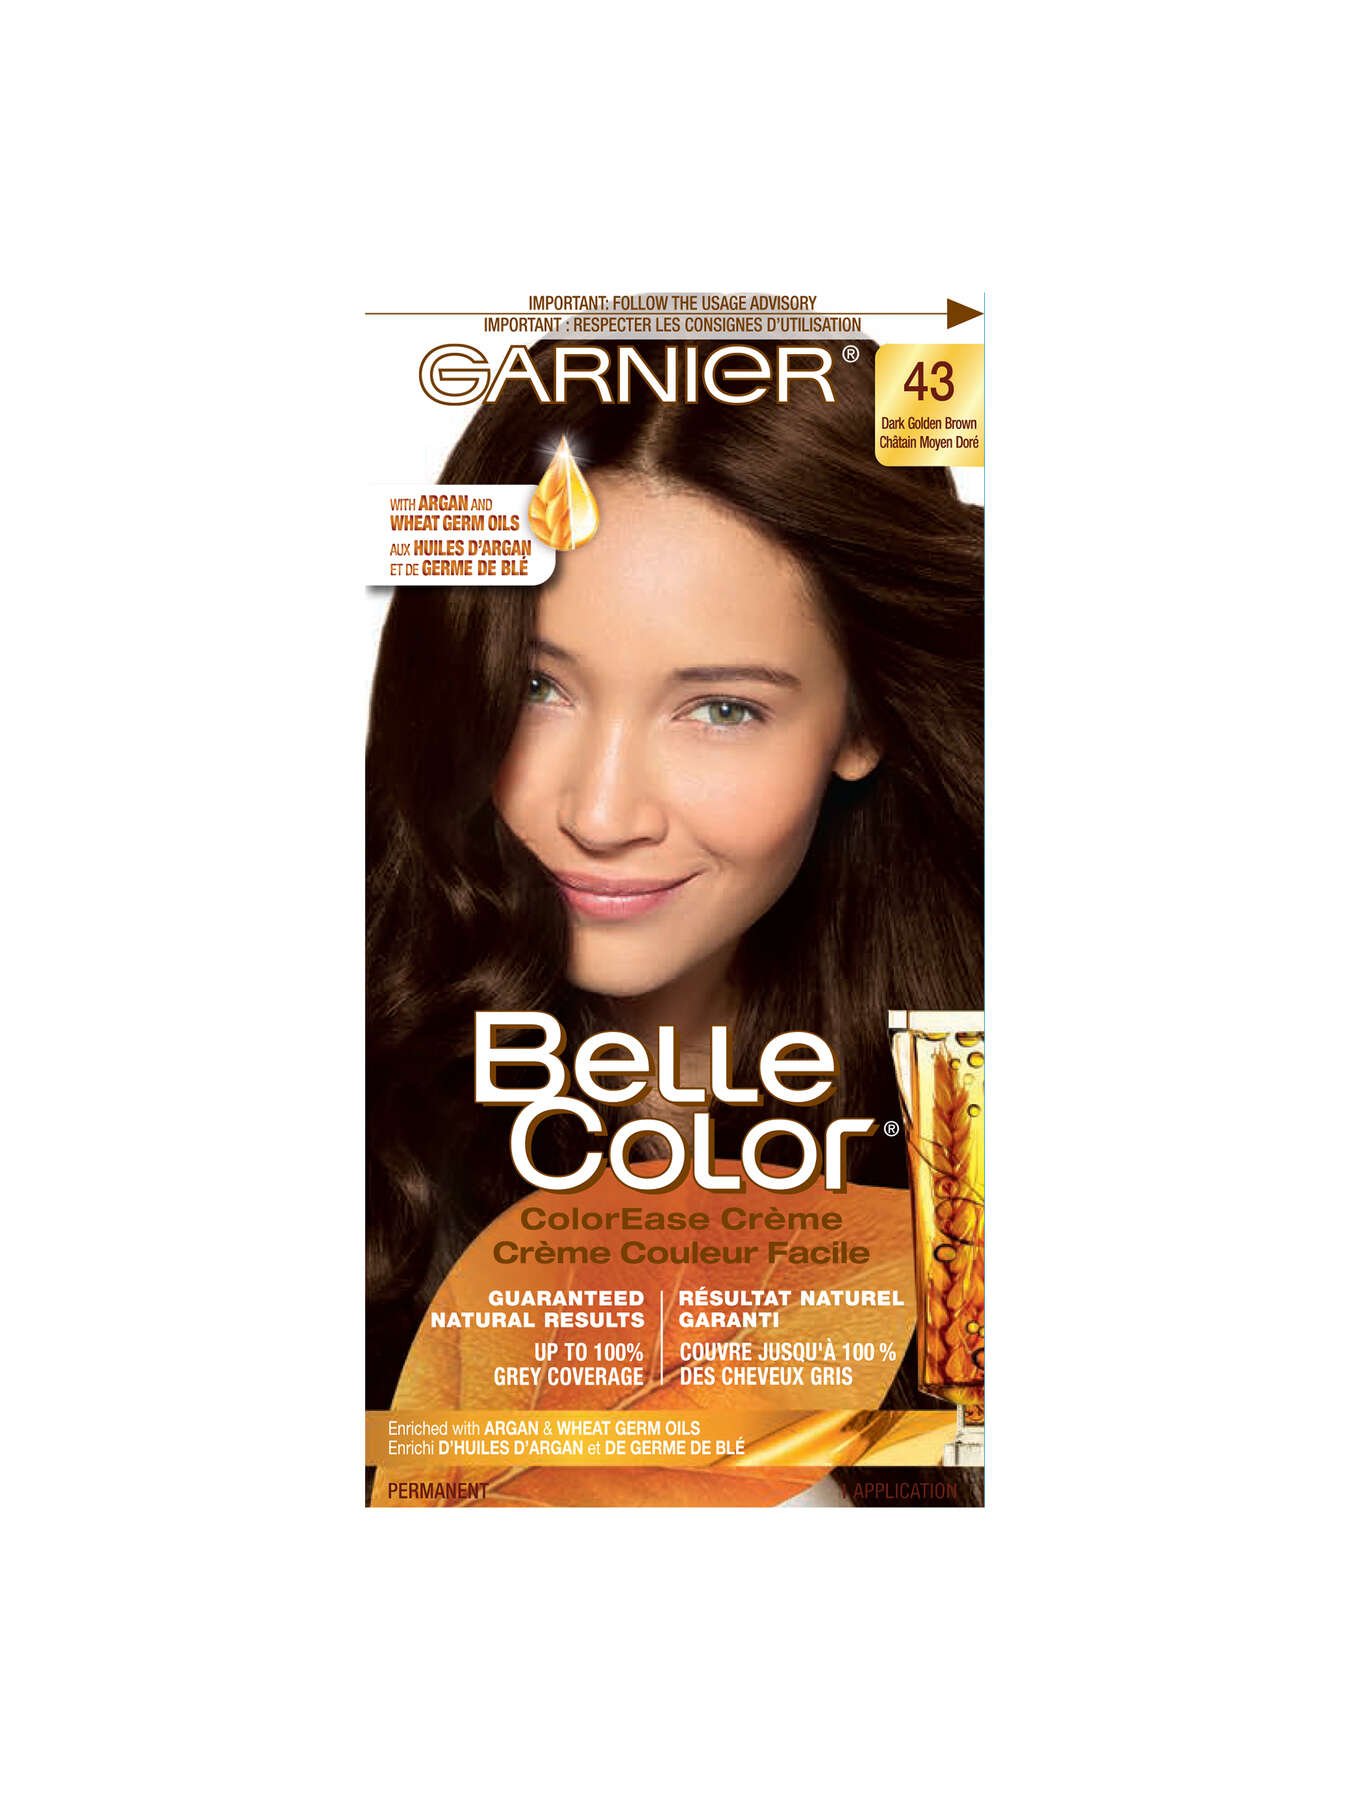 garnier hair dye belle color 43 dark golden brown 603084561230 t1